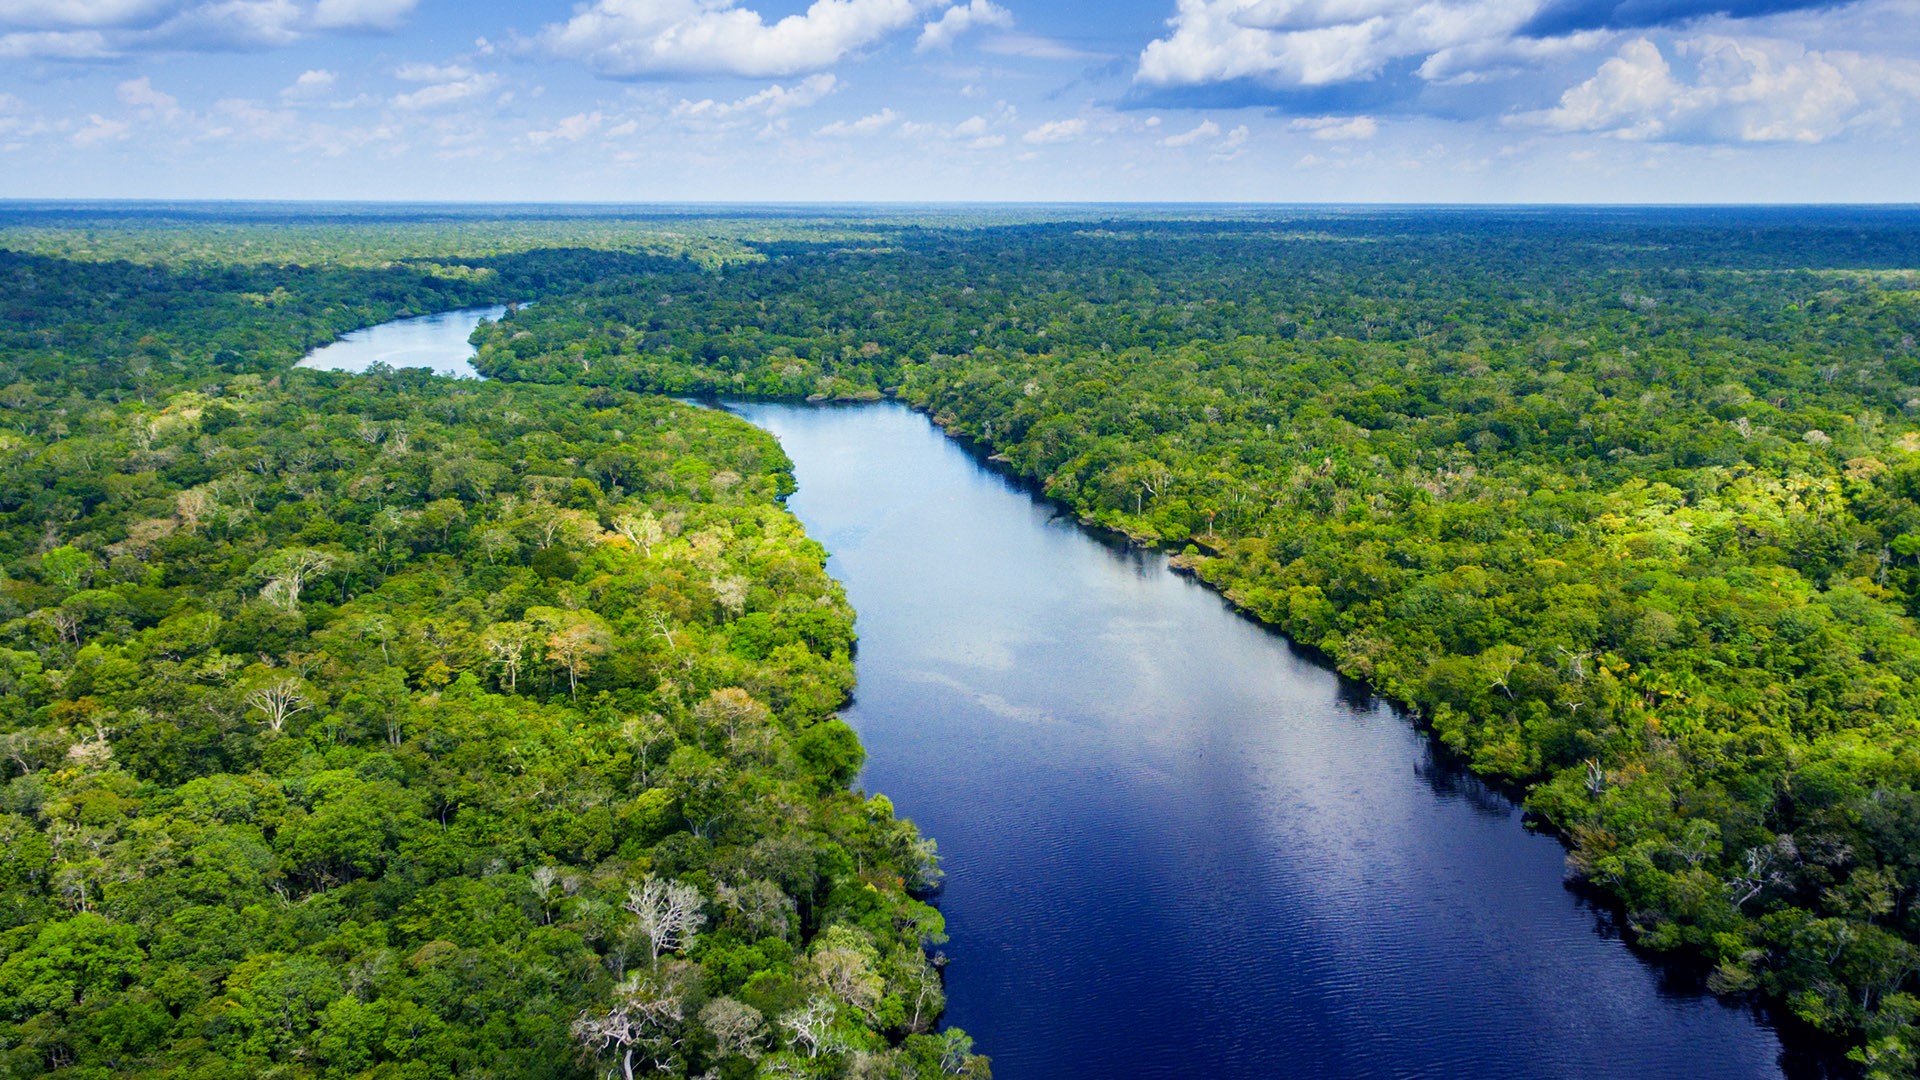 Amazon River In Brazil Windows 10 Spotlight Images